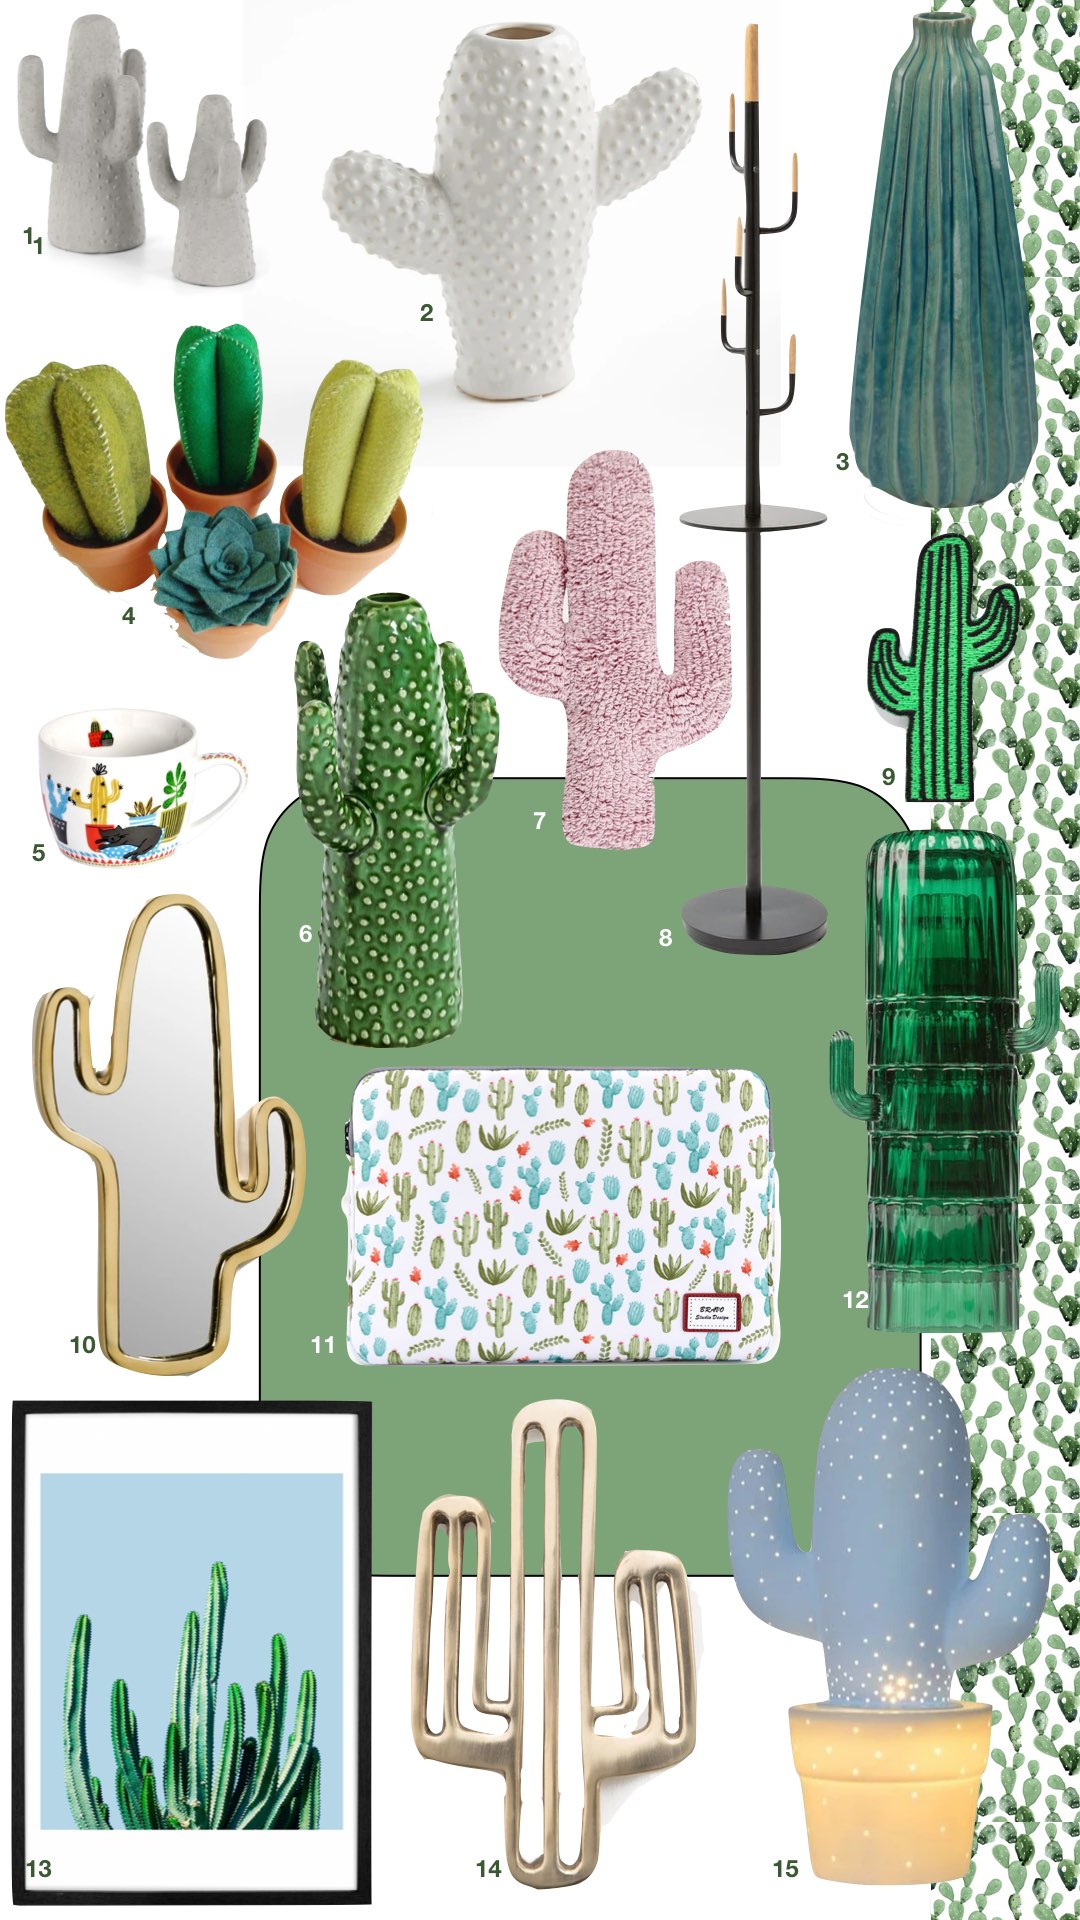 décoration cactus vase affiche design lampe porte-manteau original - blog clemaroundthecorner